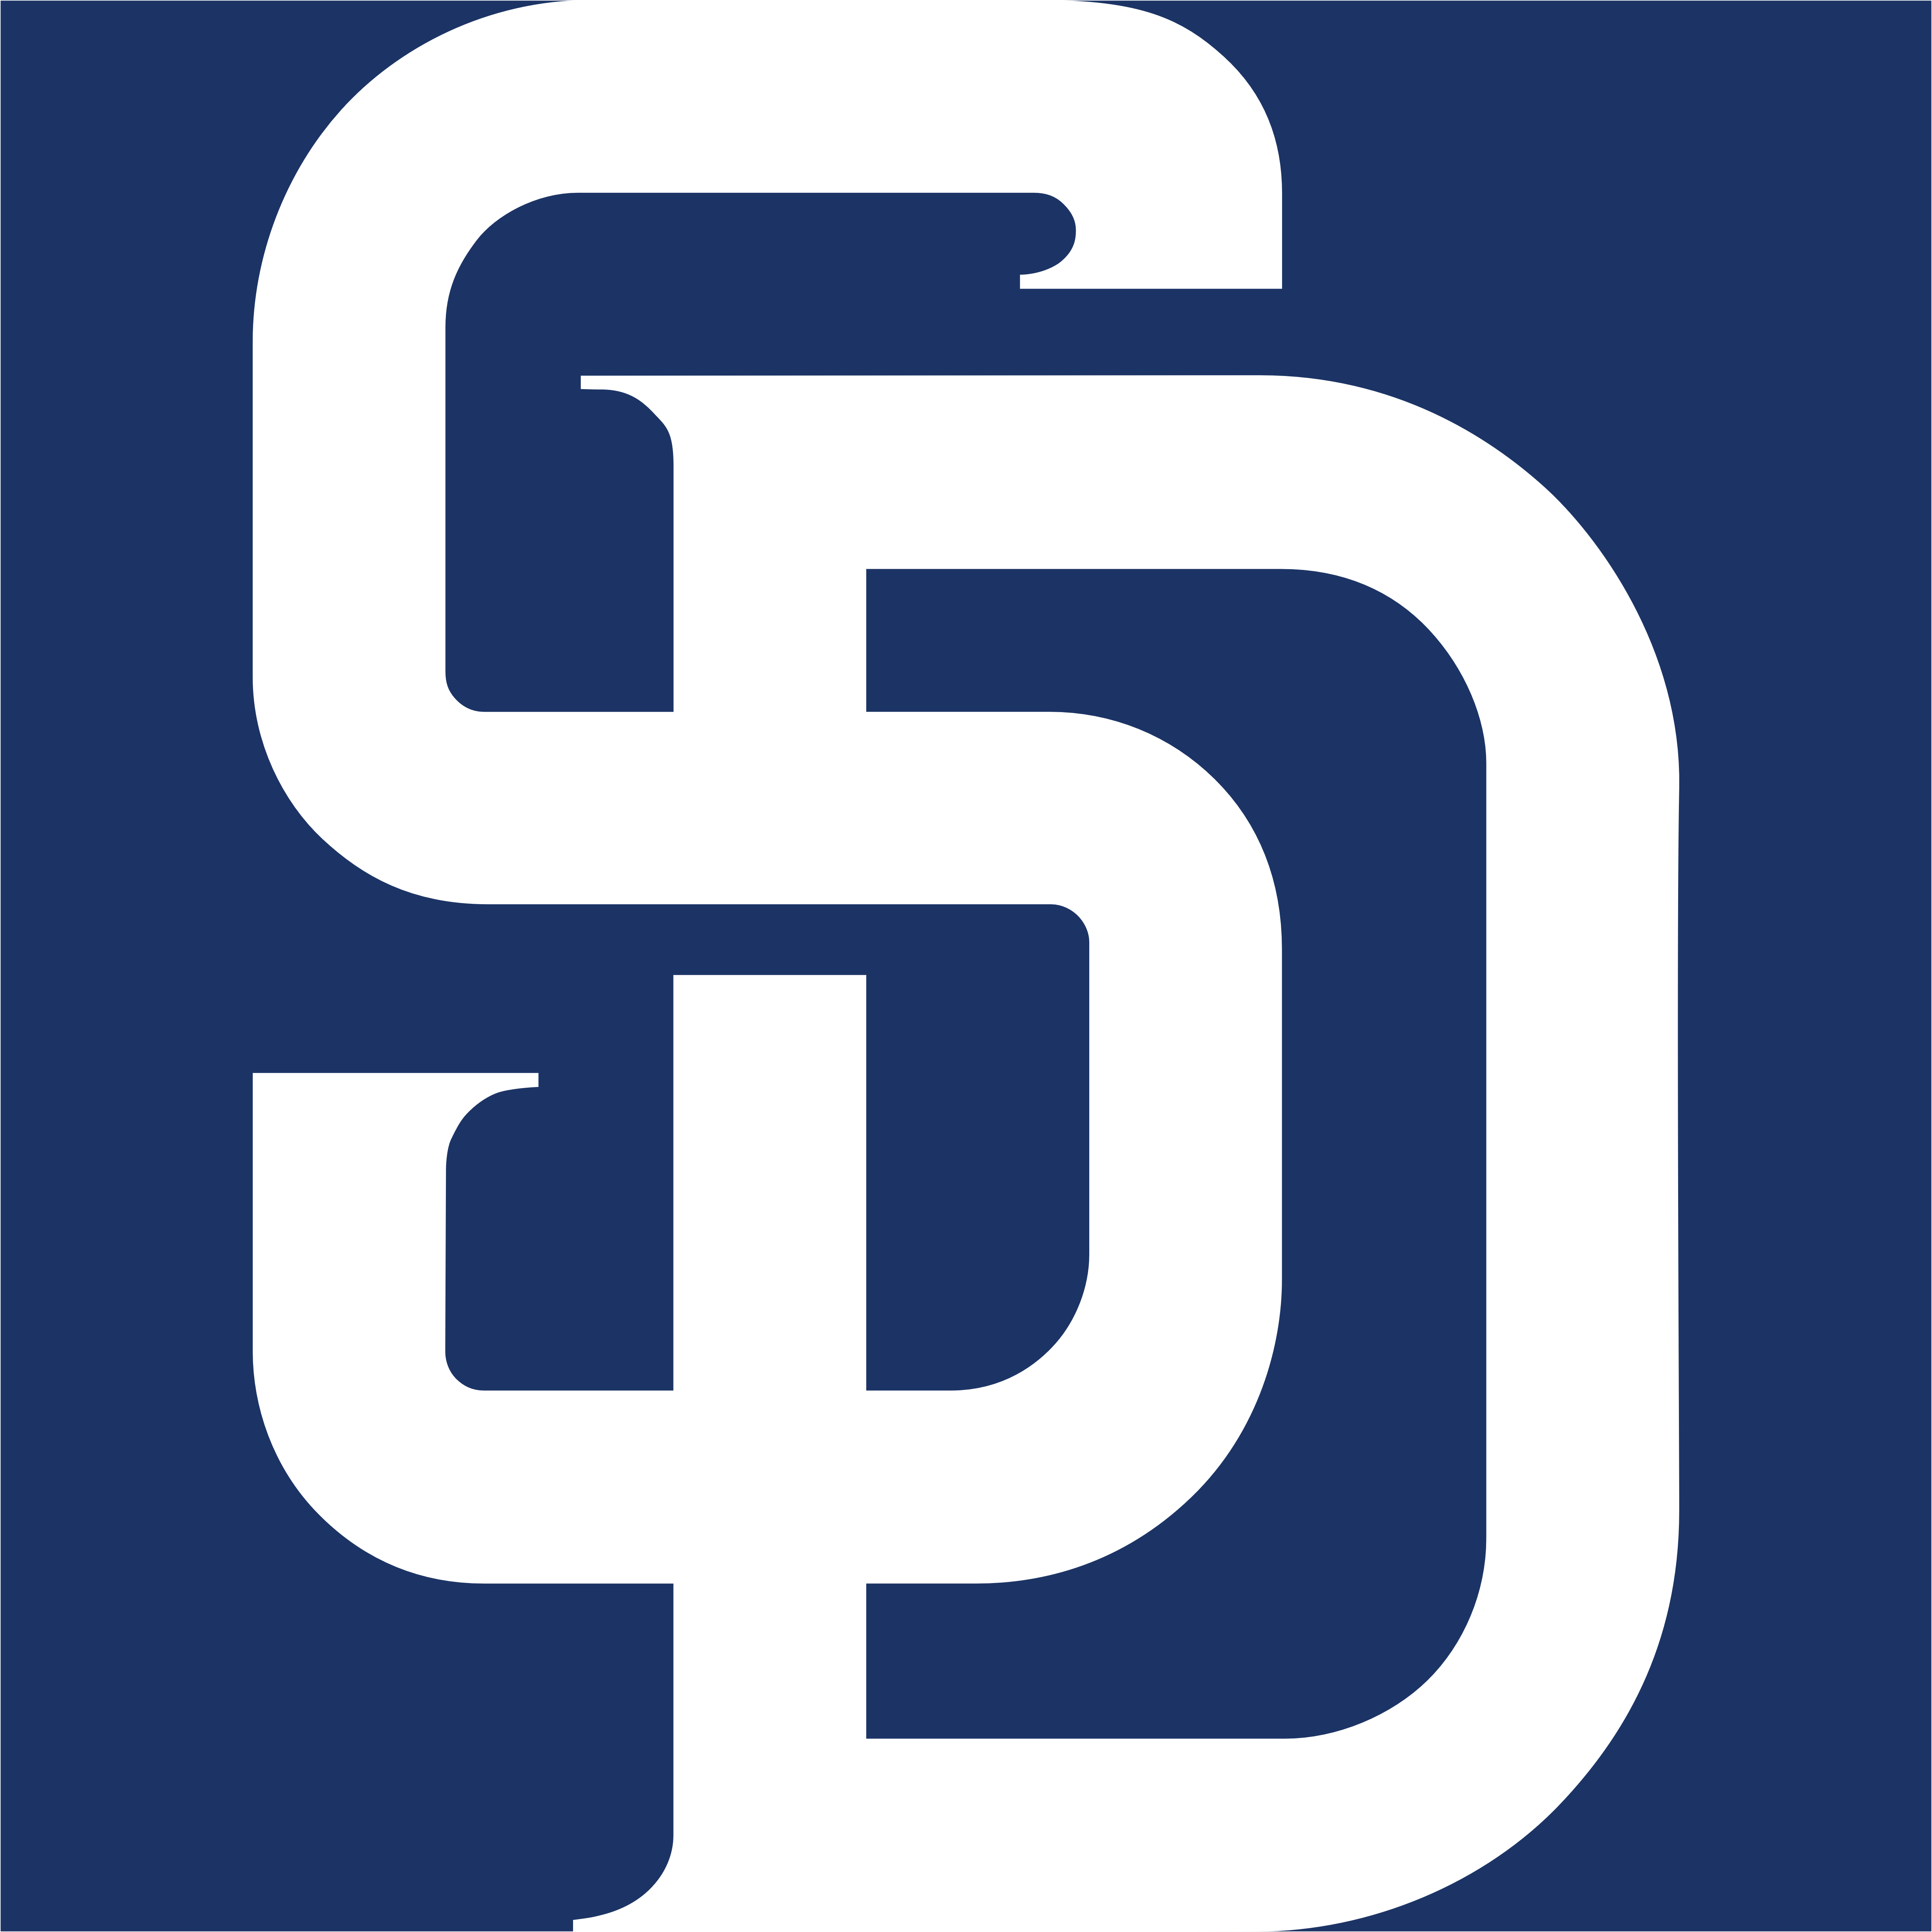 San Diego Padres team